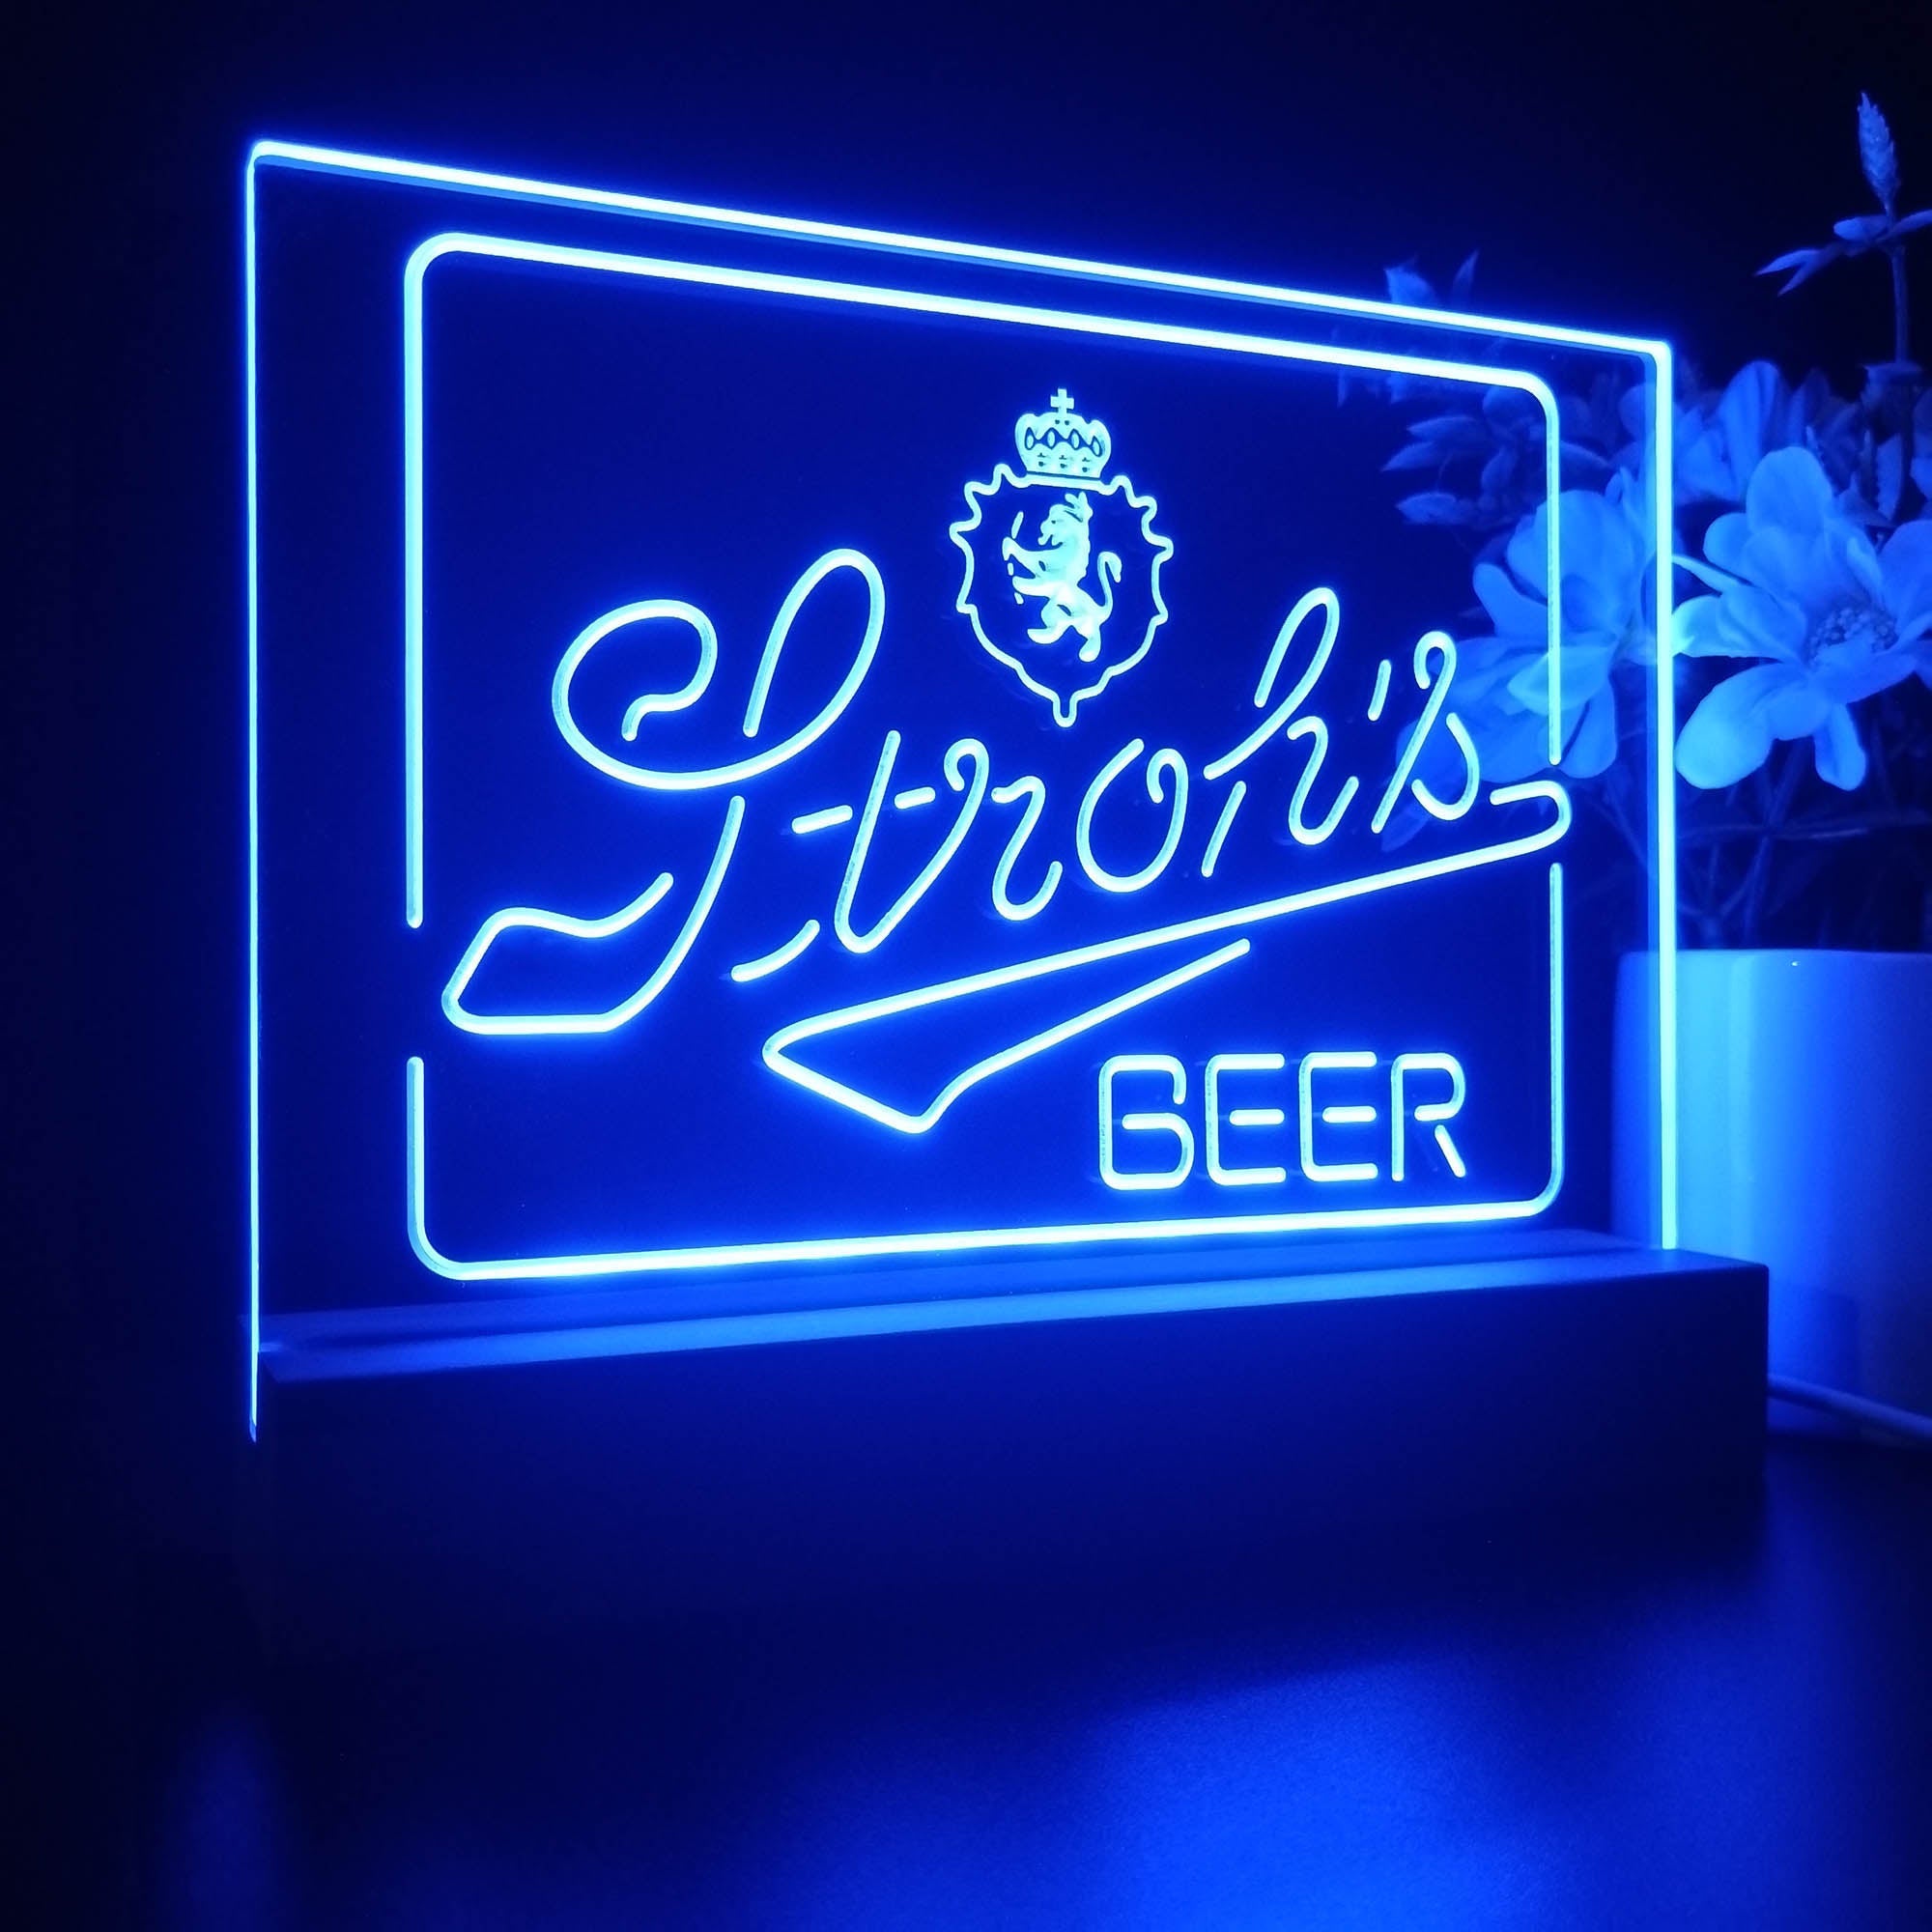 Stroh's Beer Bar Night Light LED Sign